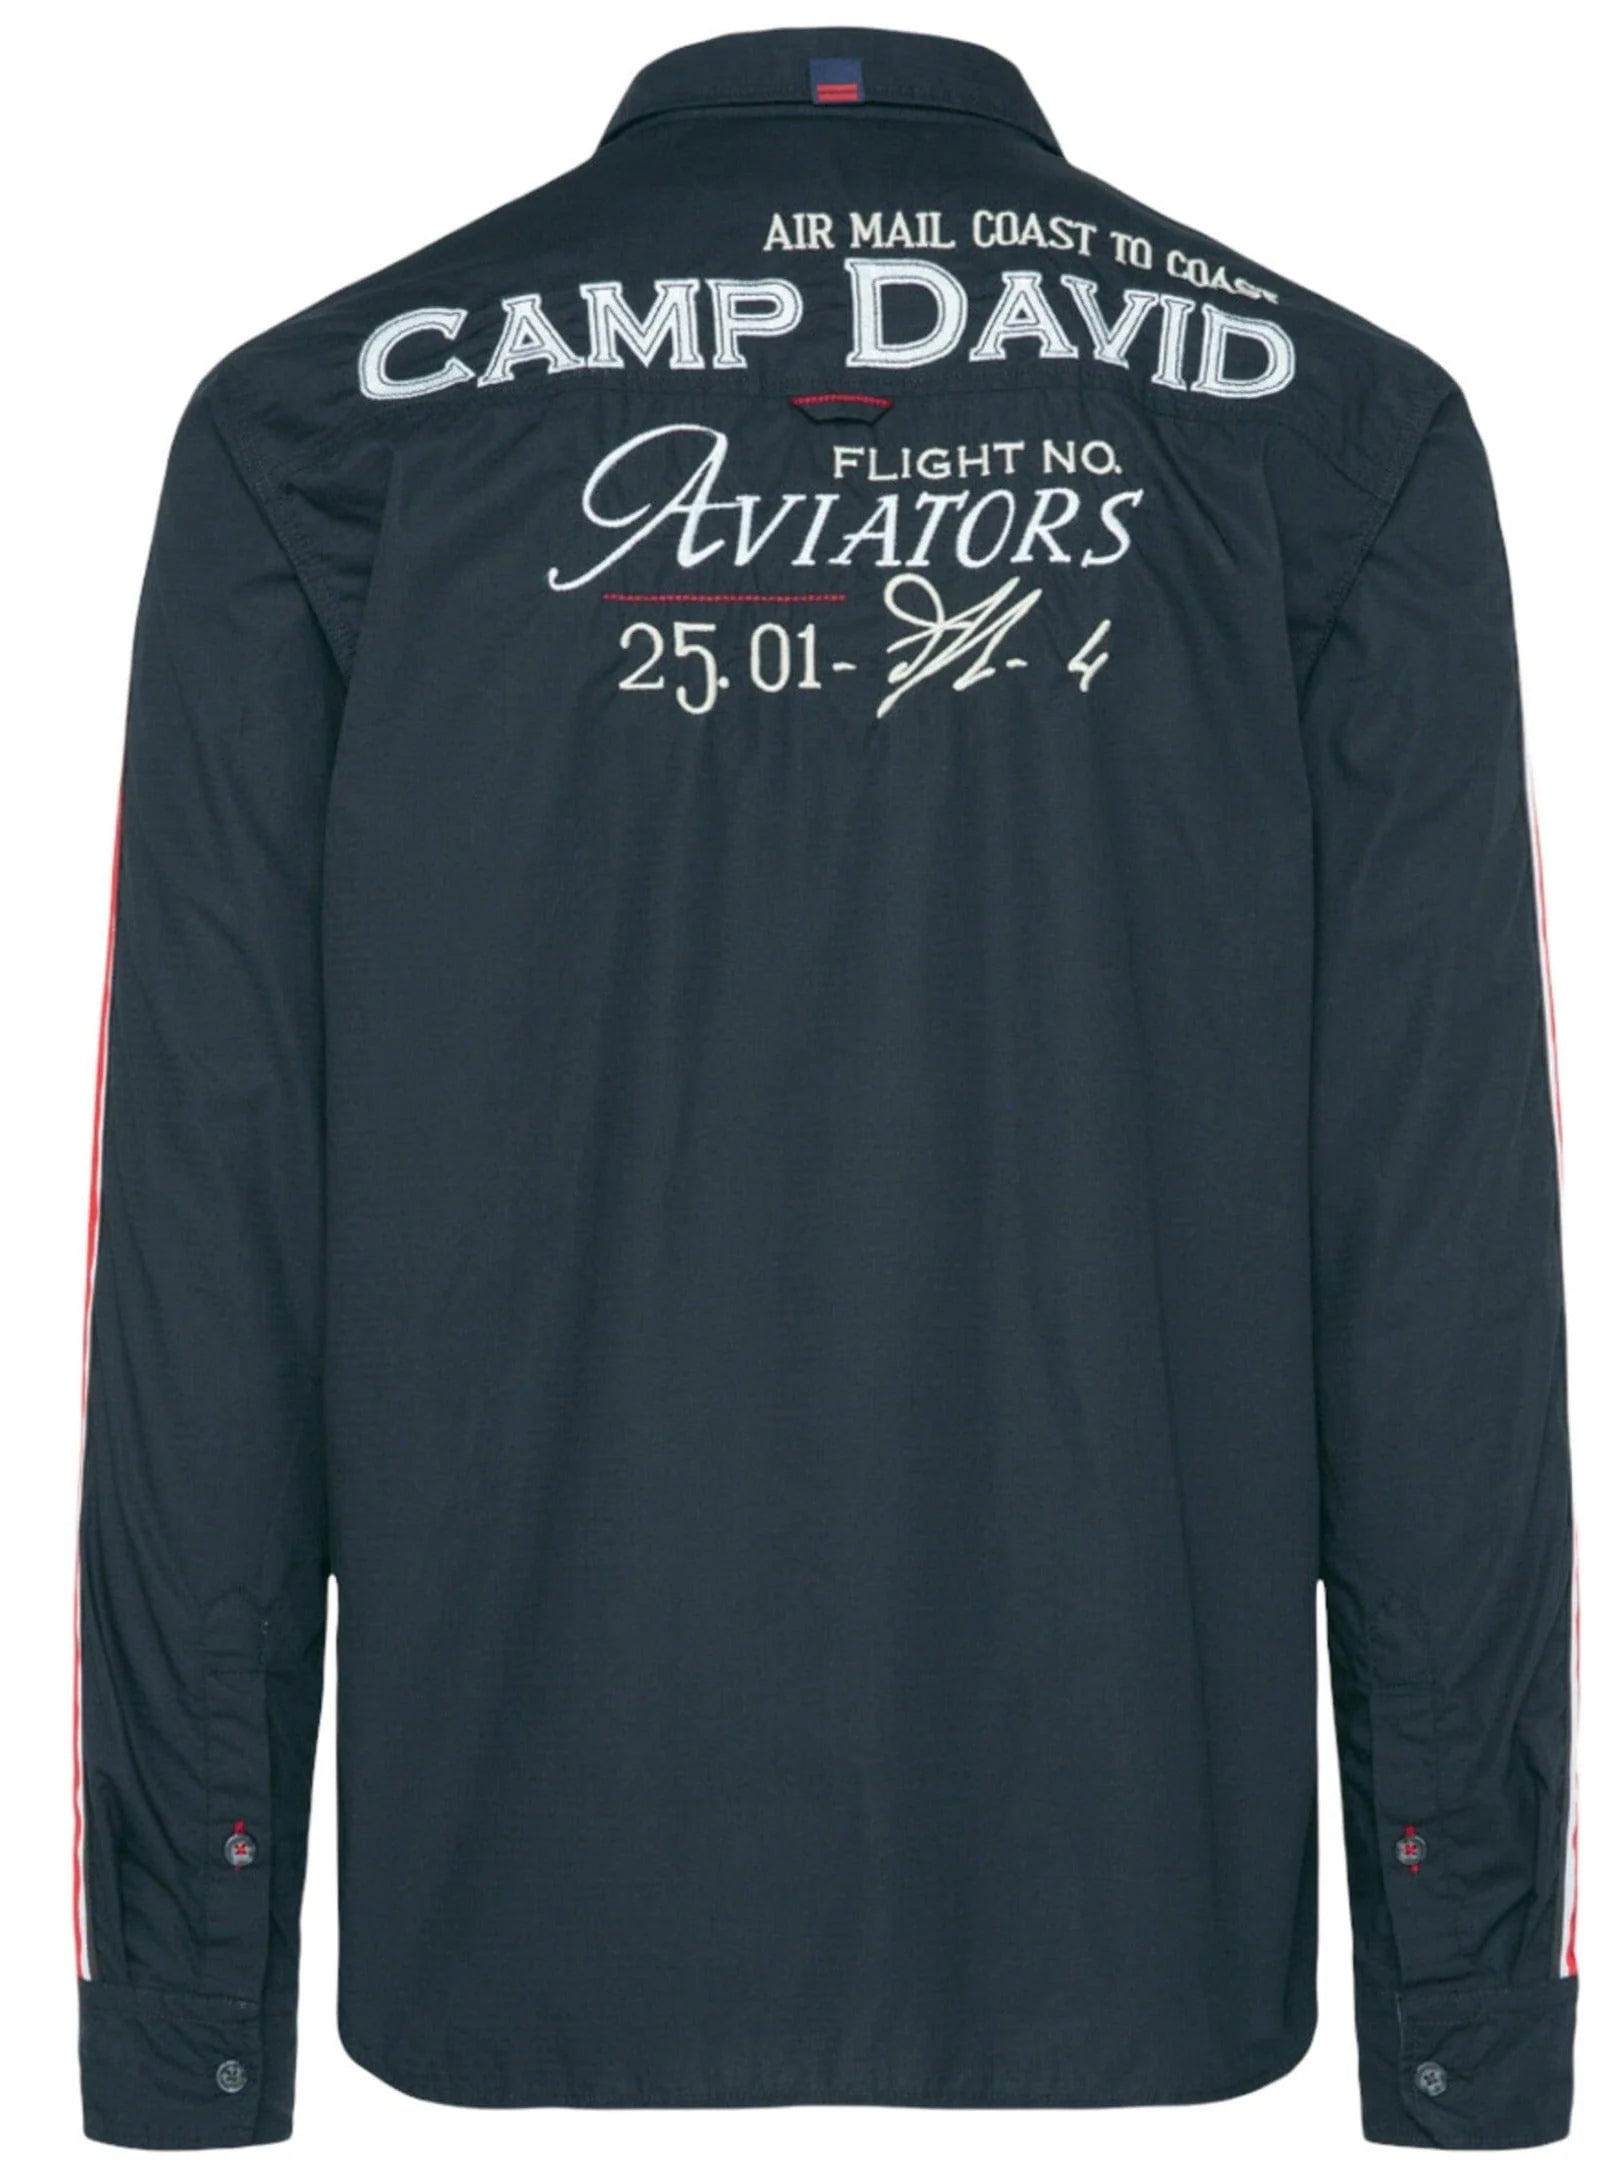 Camp David Shirt Fashion and Stateshop stripe - artwork, with back tape White